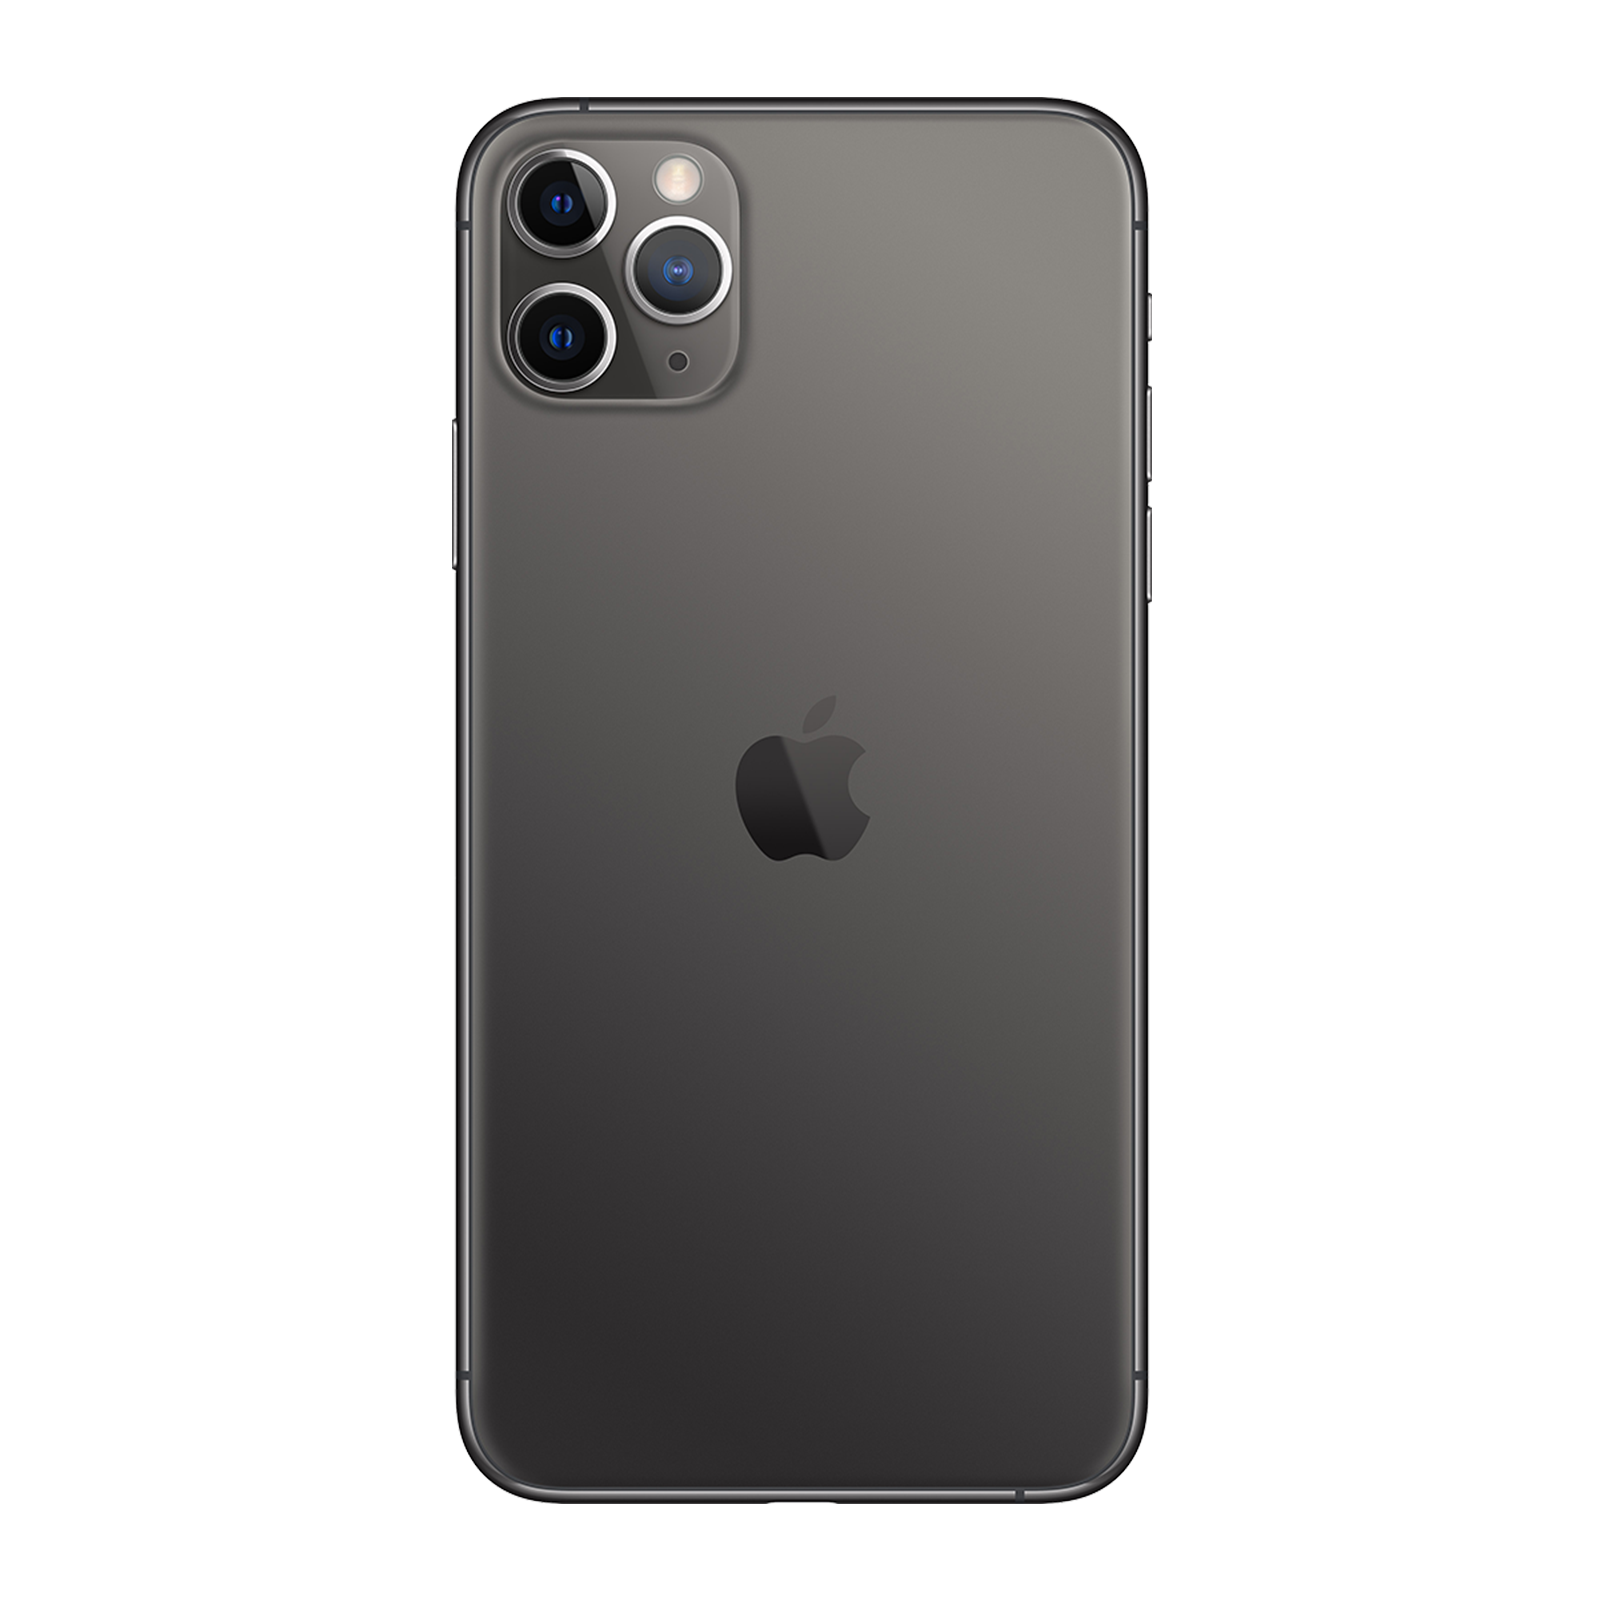 Apple iPhone 11 Pro 64GB Space Grey Fair - Unlocked